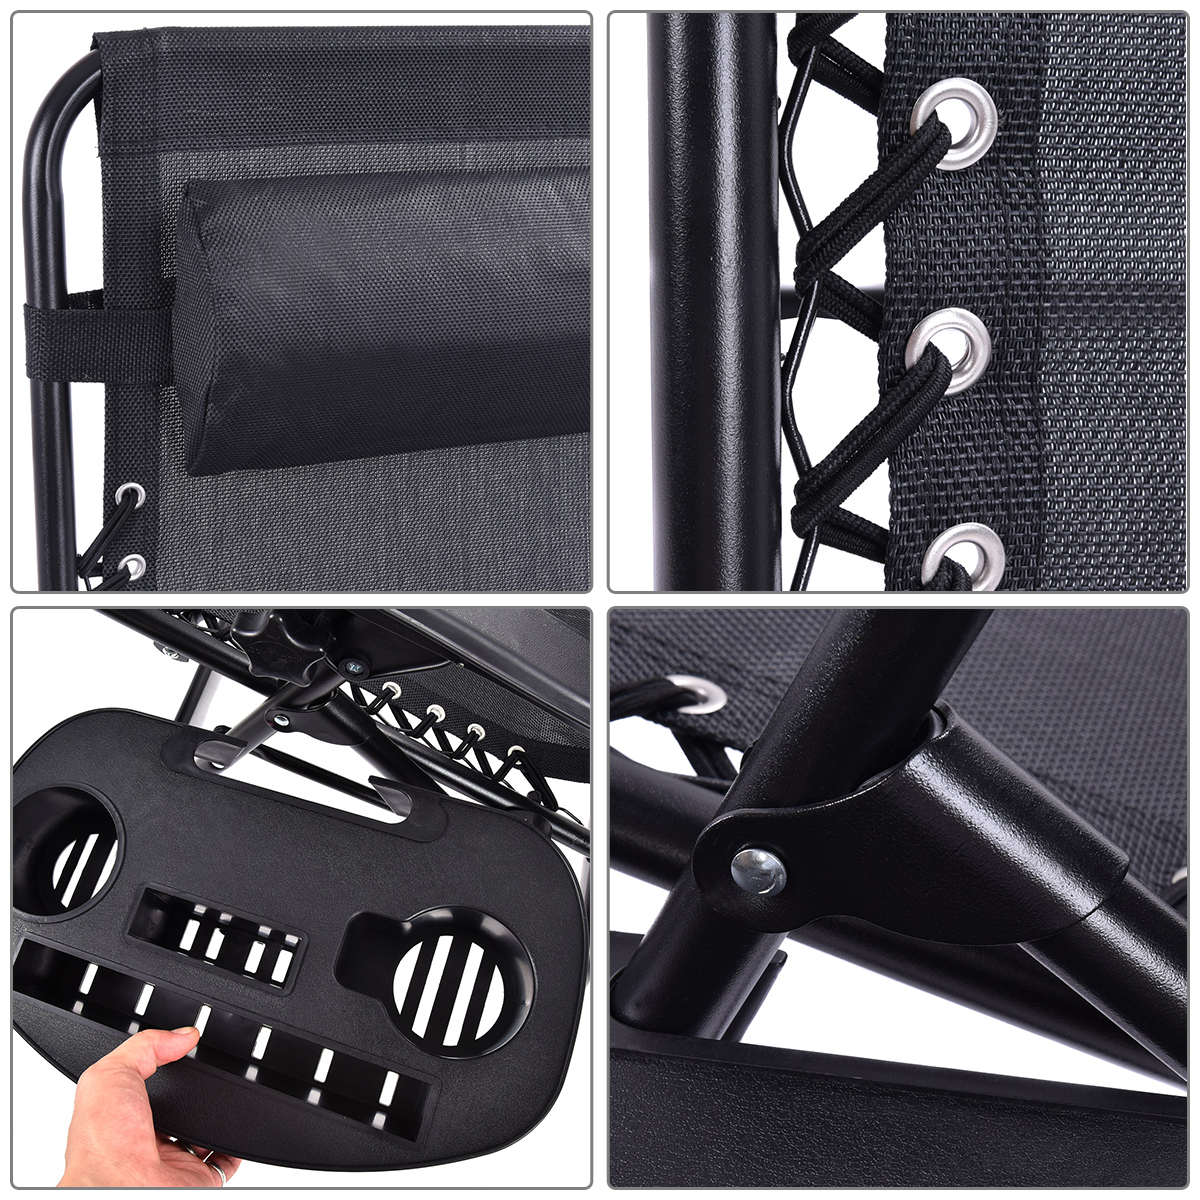 Topbuy 2PC Zero Gravity Chair Adjustable Recliners Textiliene Black - image 2 of 6